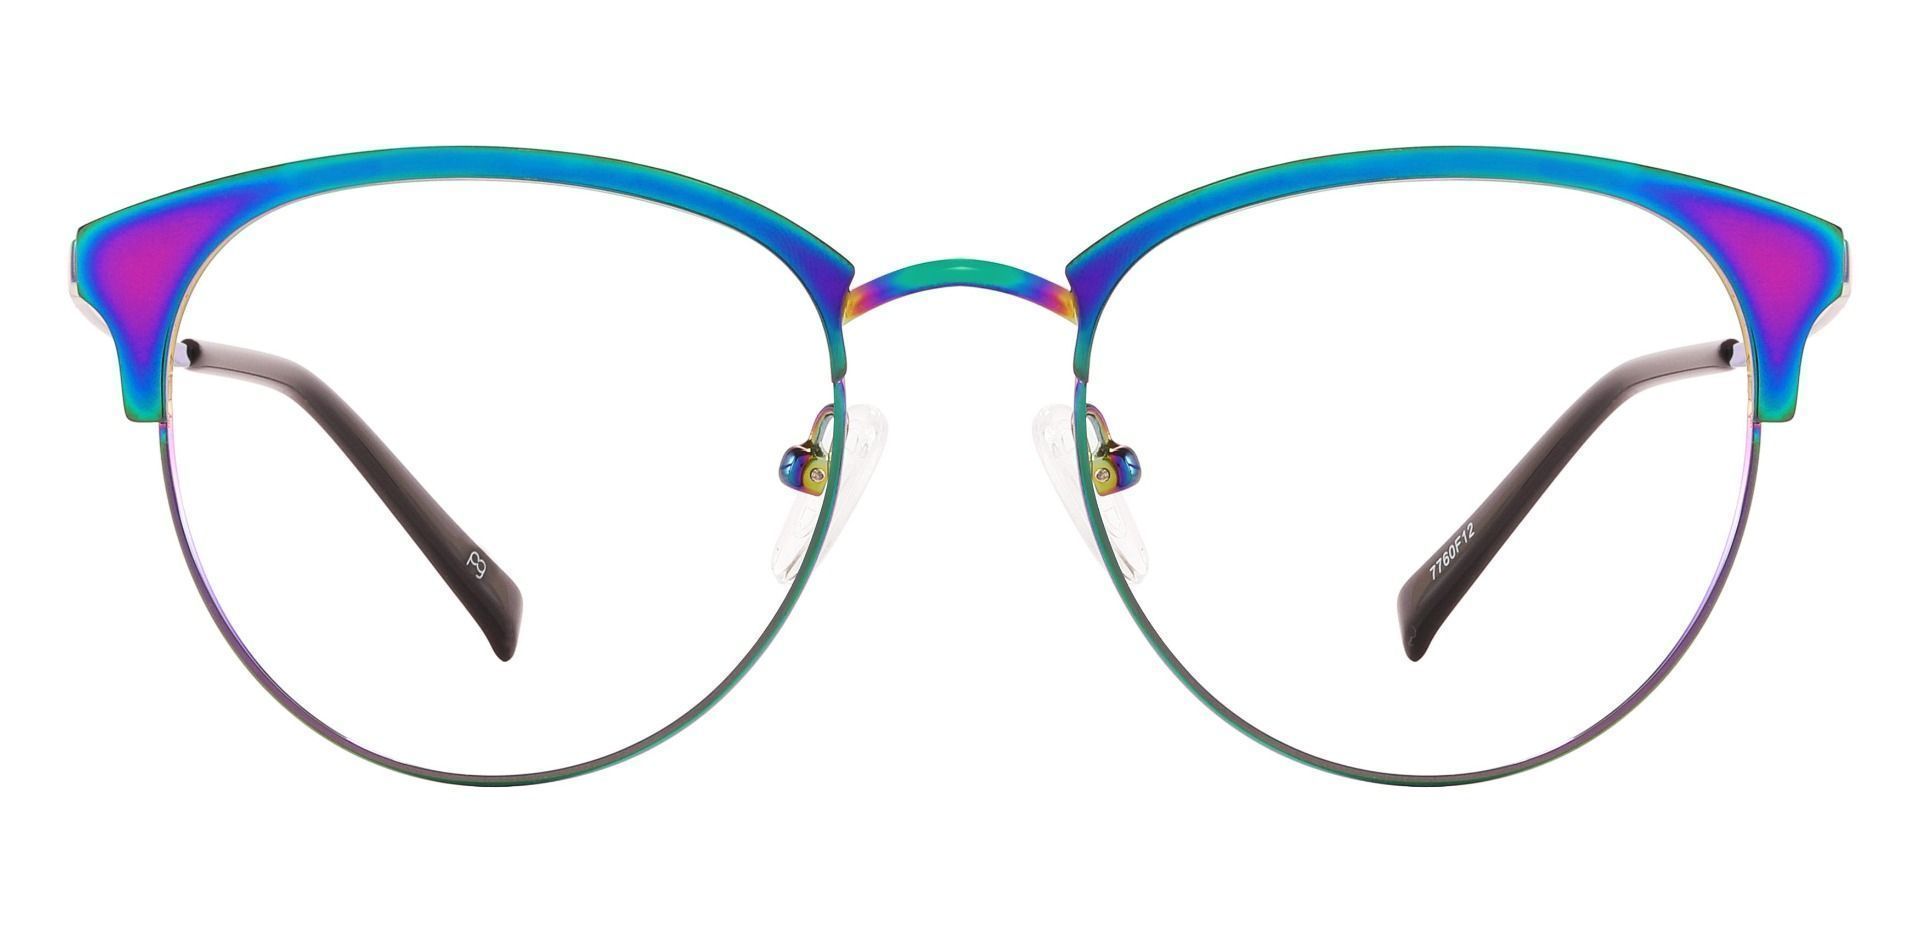 Kendra Browline Non-Rx Glasses - Iridescent | Women's Eyeglasses ...